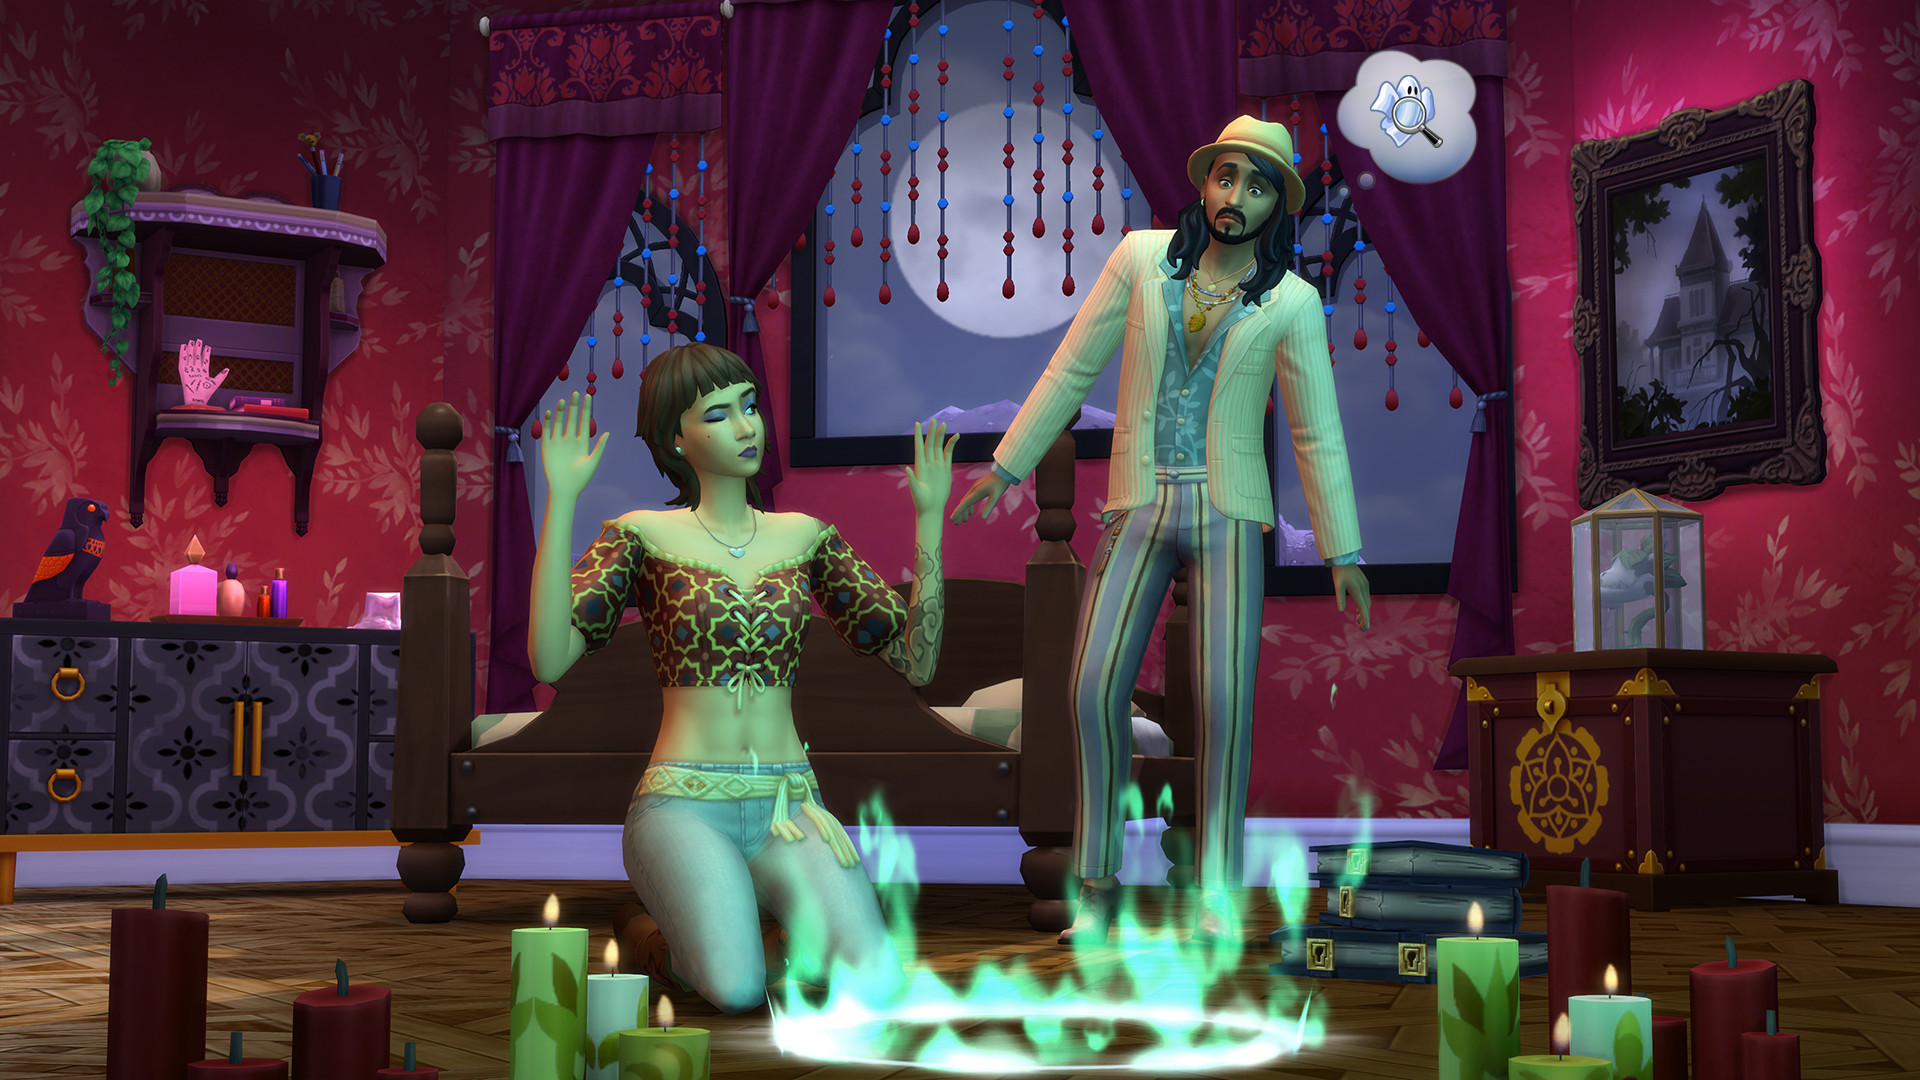 The Sims 4 Paranormal Stuff Pack -Torrent Oyun indir - Part 2